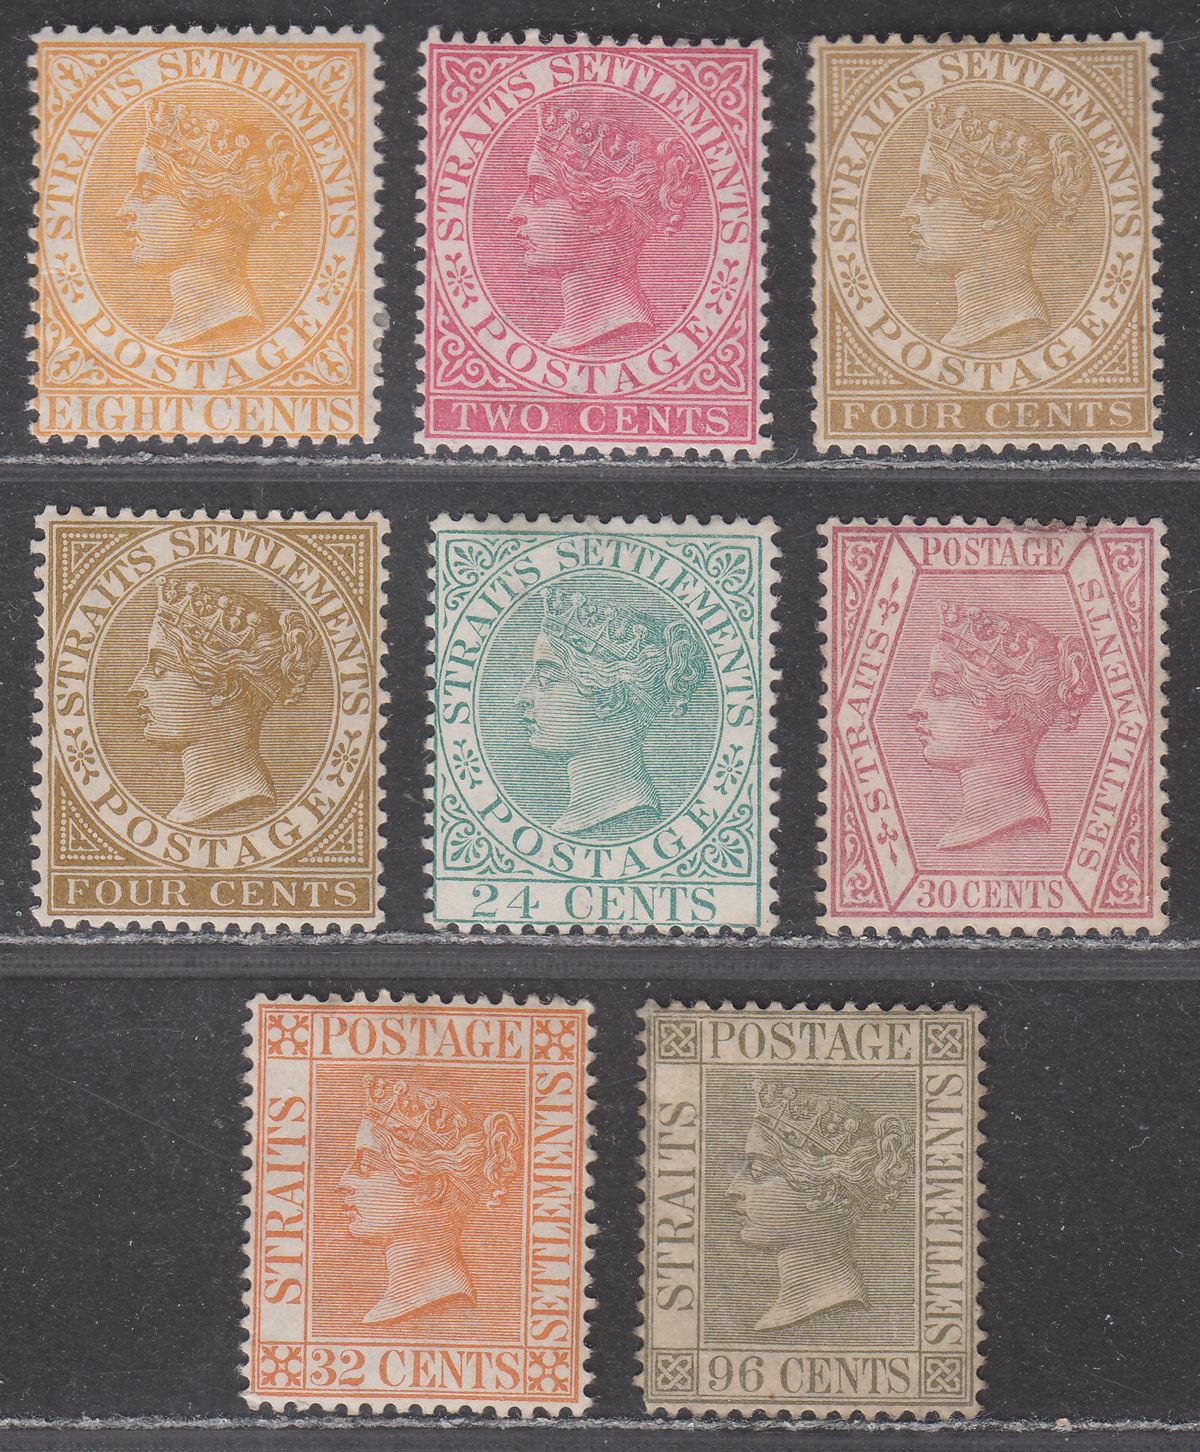 Malaya Straits Settlements 1882-91 QV wmk Crown CA Selection to 96c Mint mixed